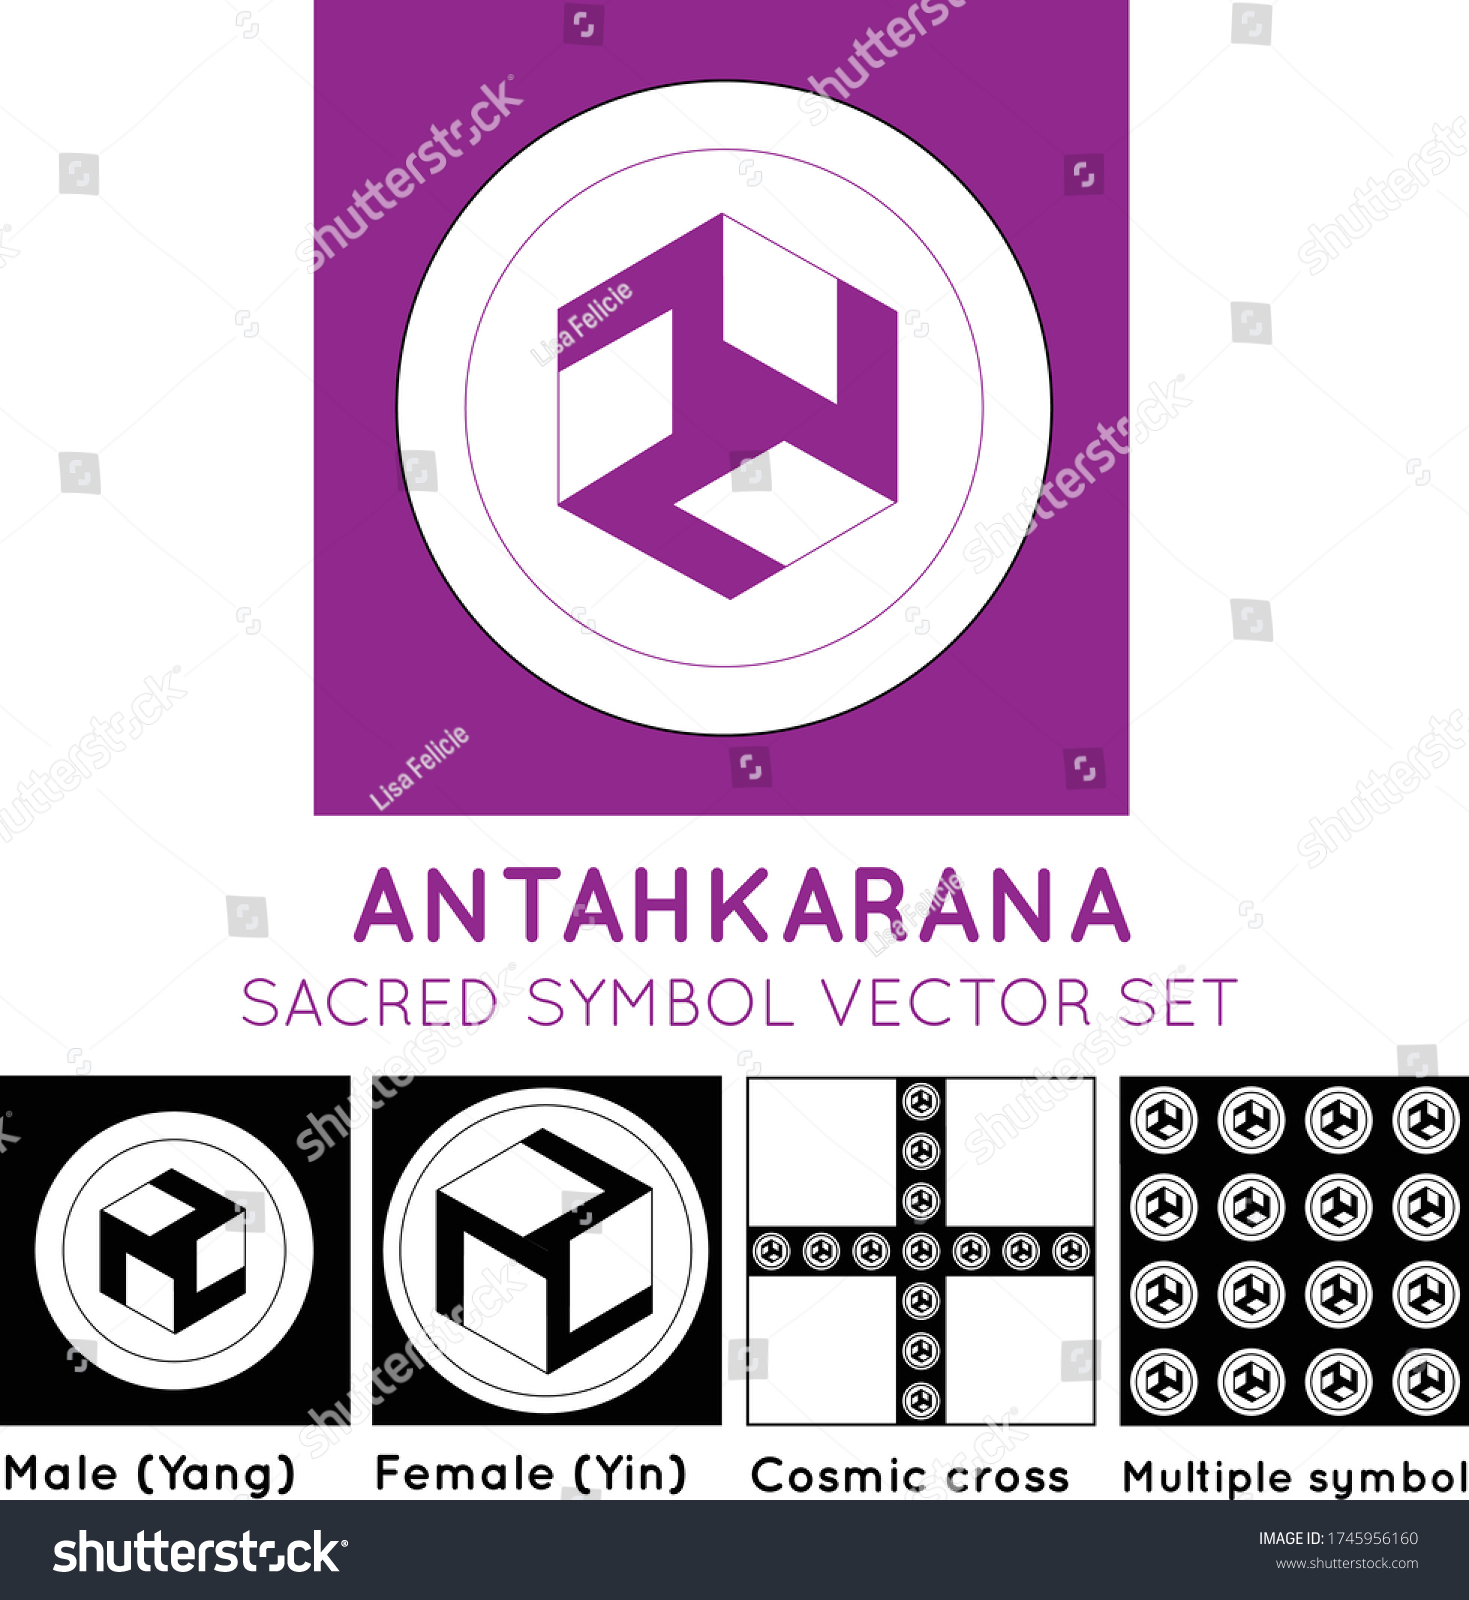 SVG of Antahkarana (sacred symbol vector set) svg